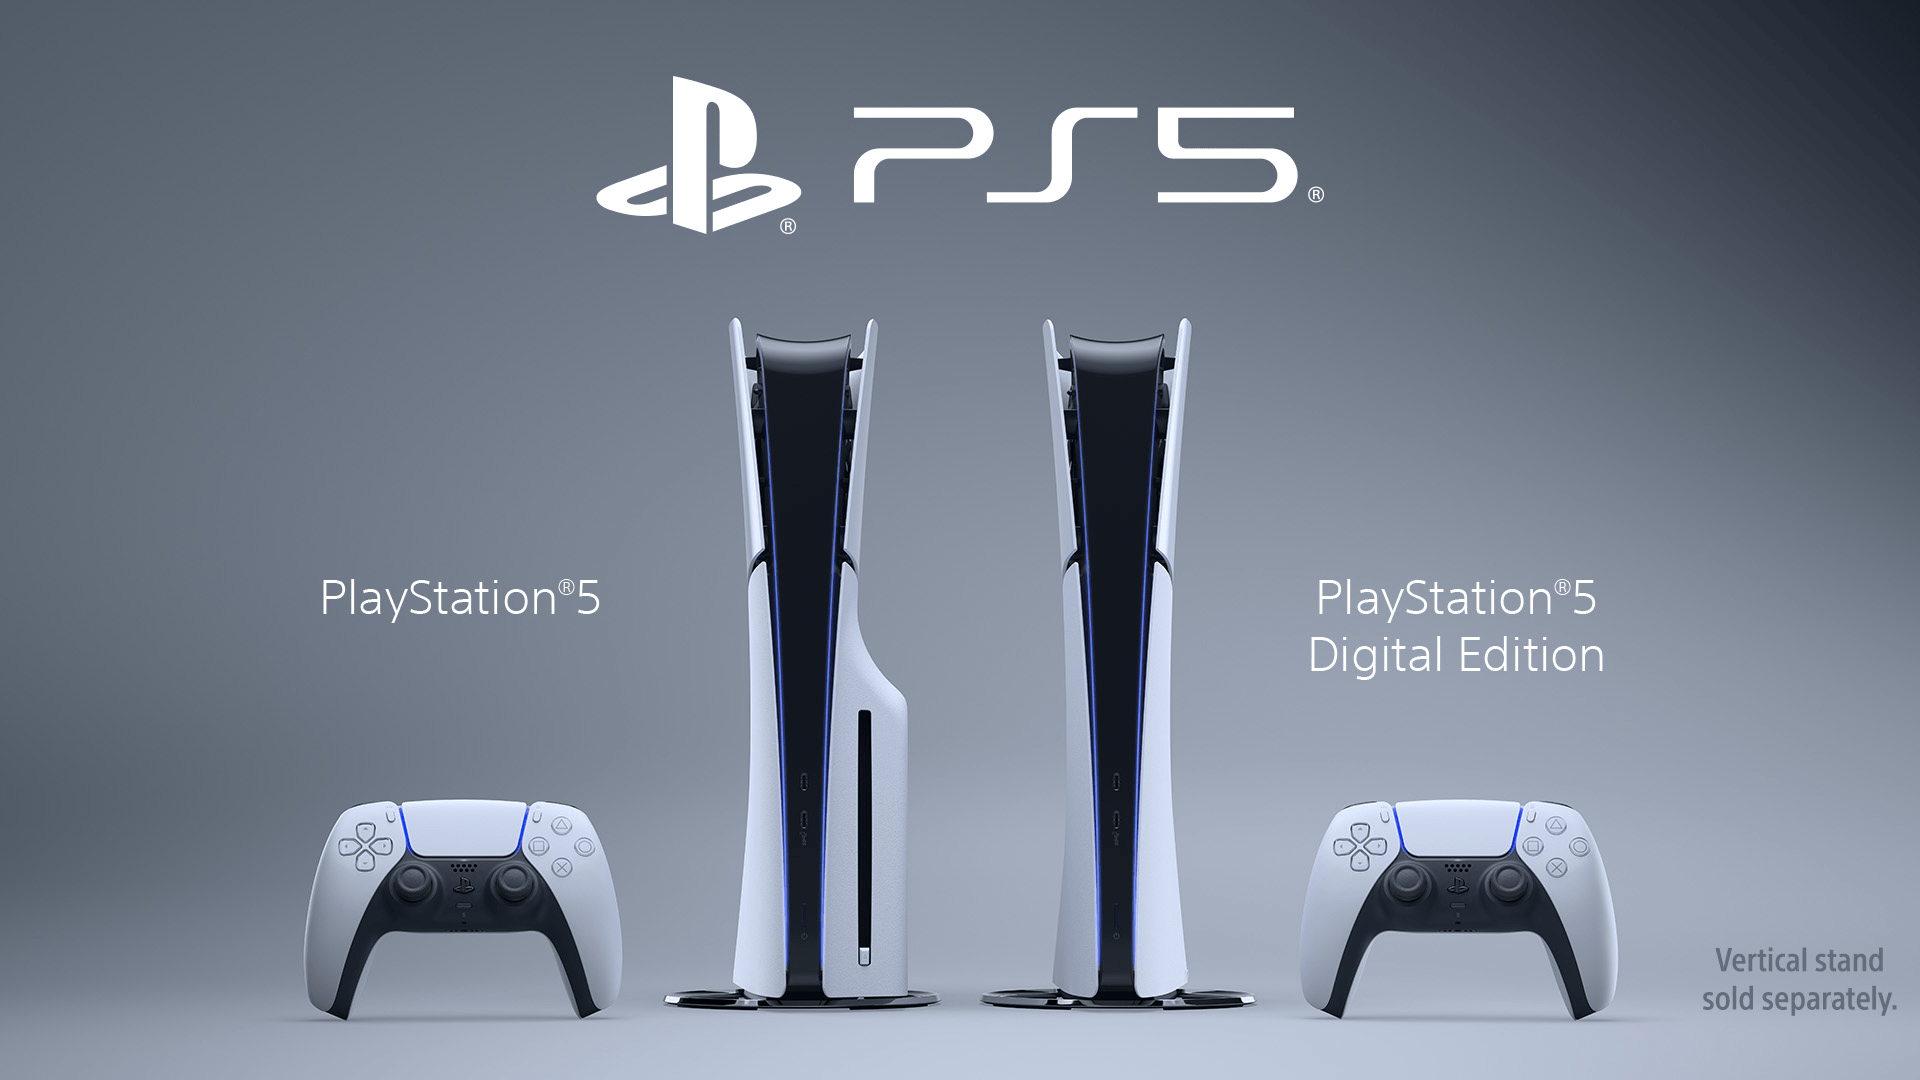 PS5 digital edition